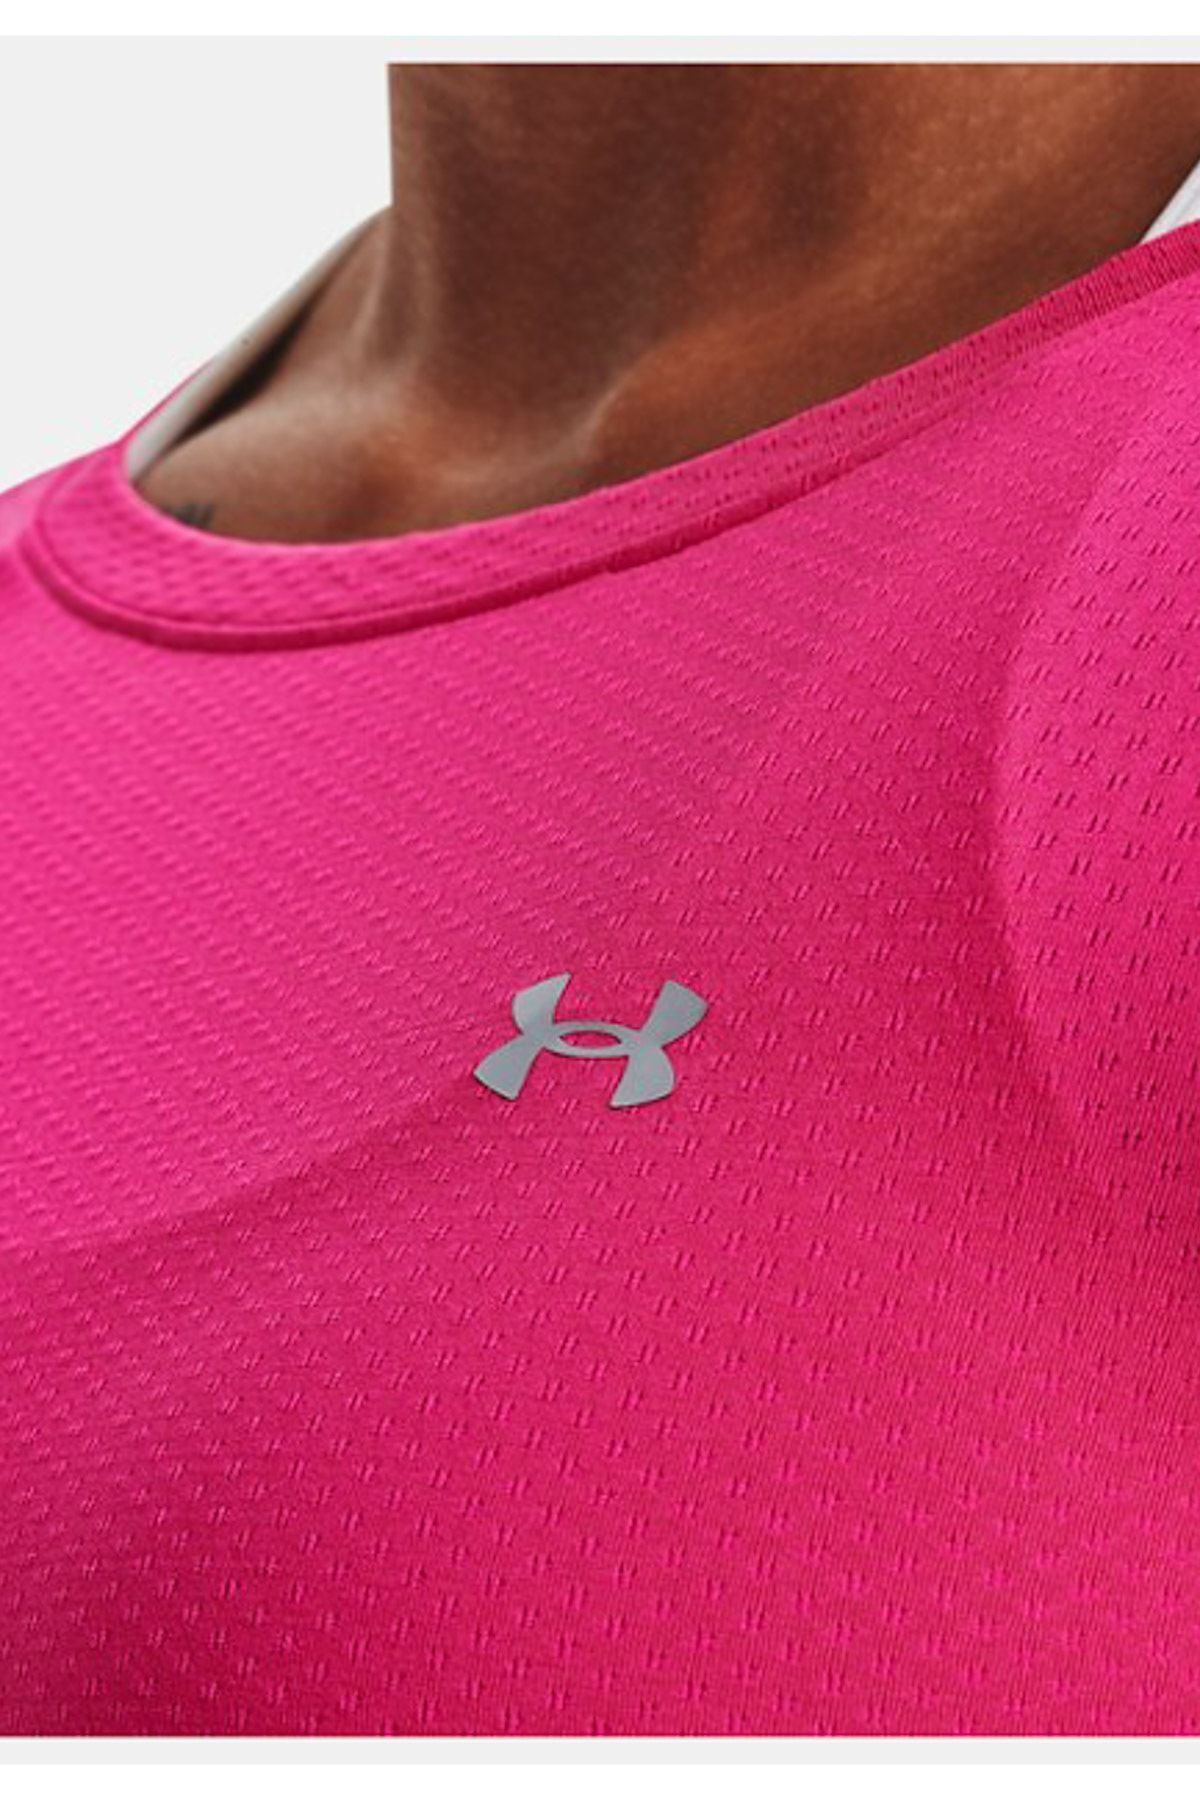 Under Armour Women's HeatGear® Armour Branded Leggings Black / Meteor Pink